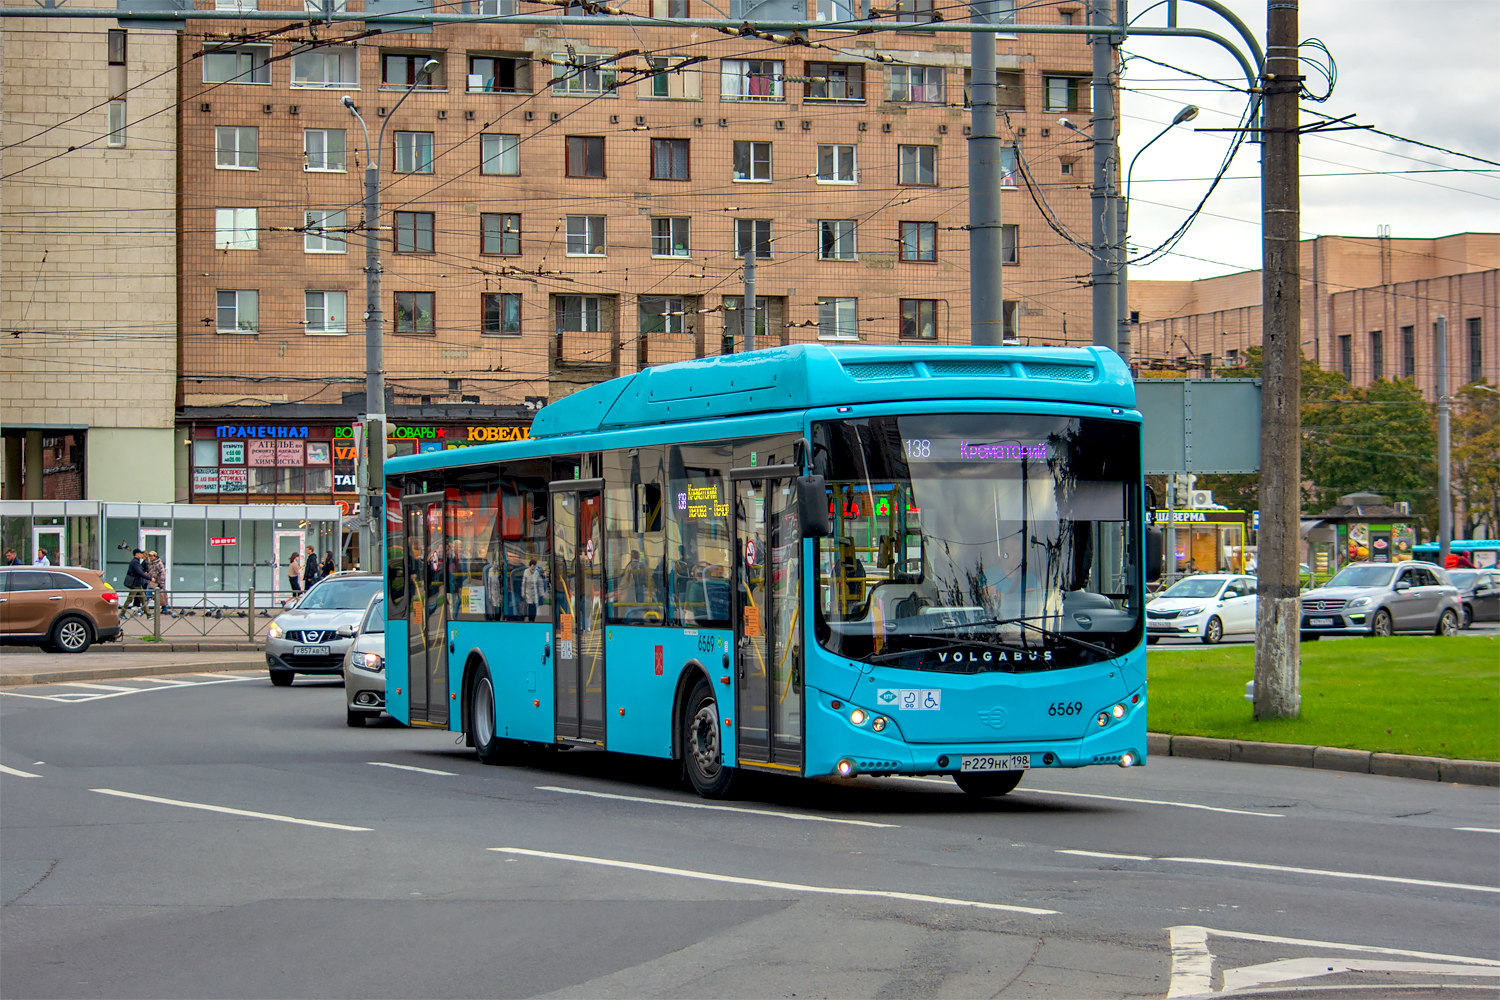 Saint Petersburg, Volgabus-5270.G4 (CNG) # 6569